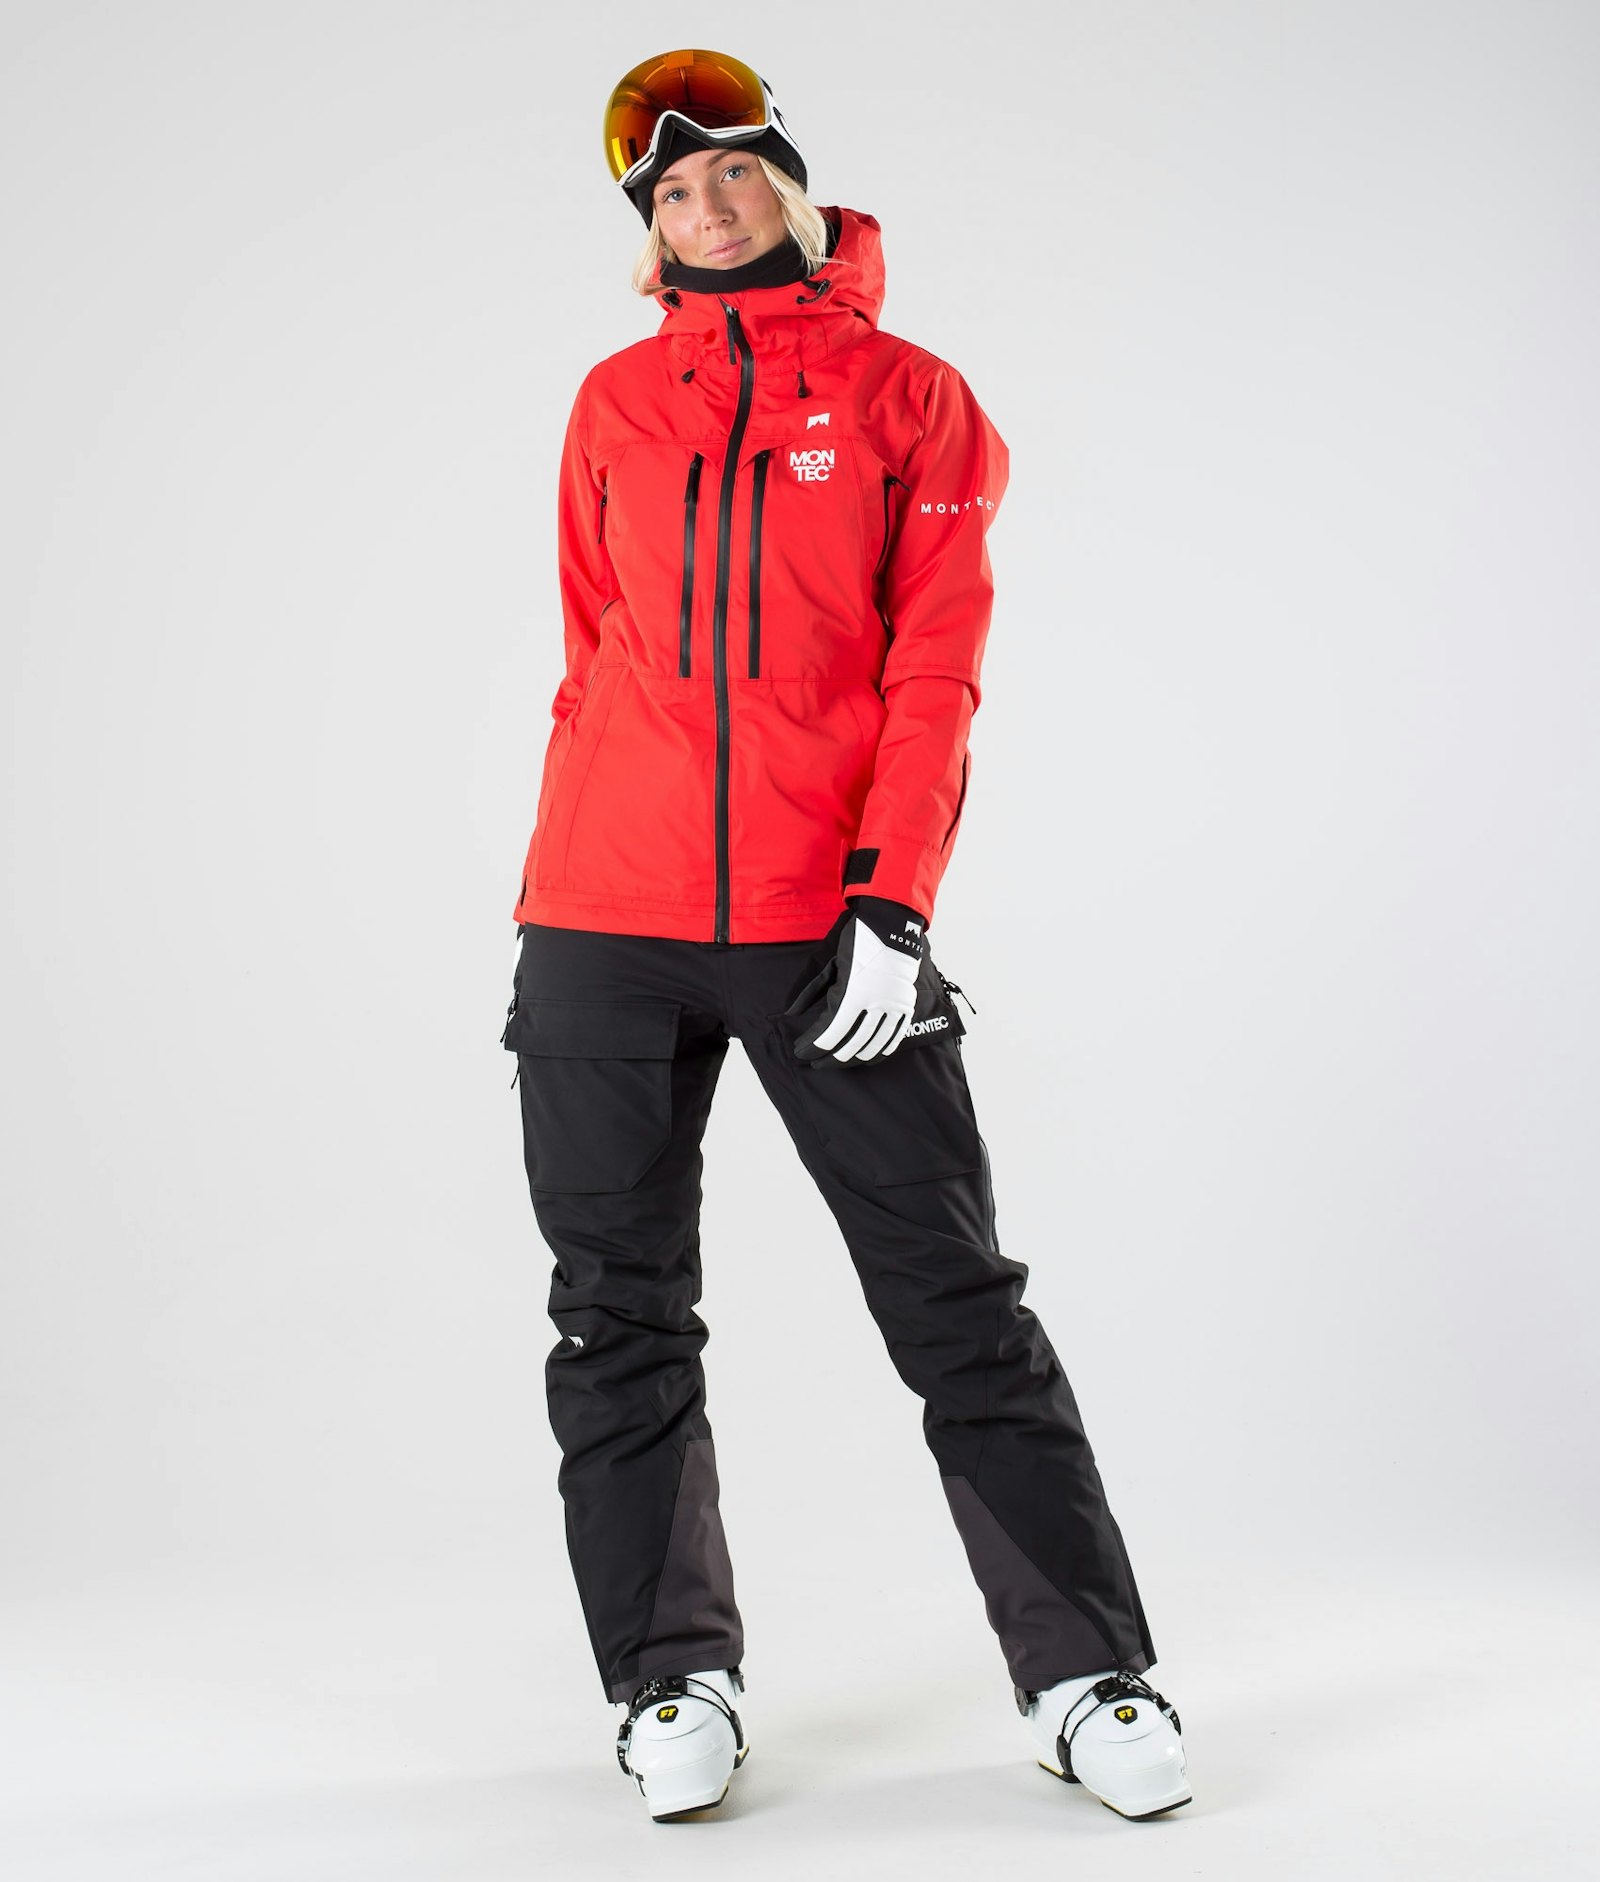 Moss W 2019 Manteau Ski Femme Red